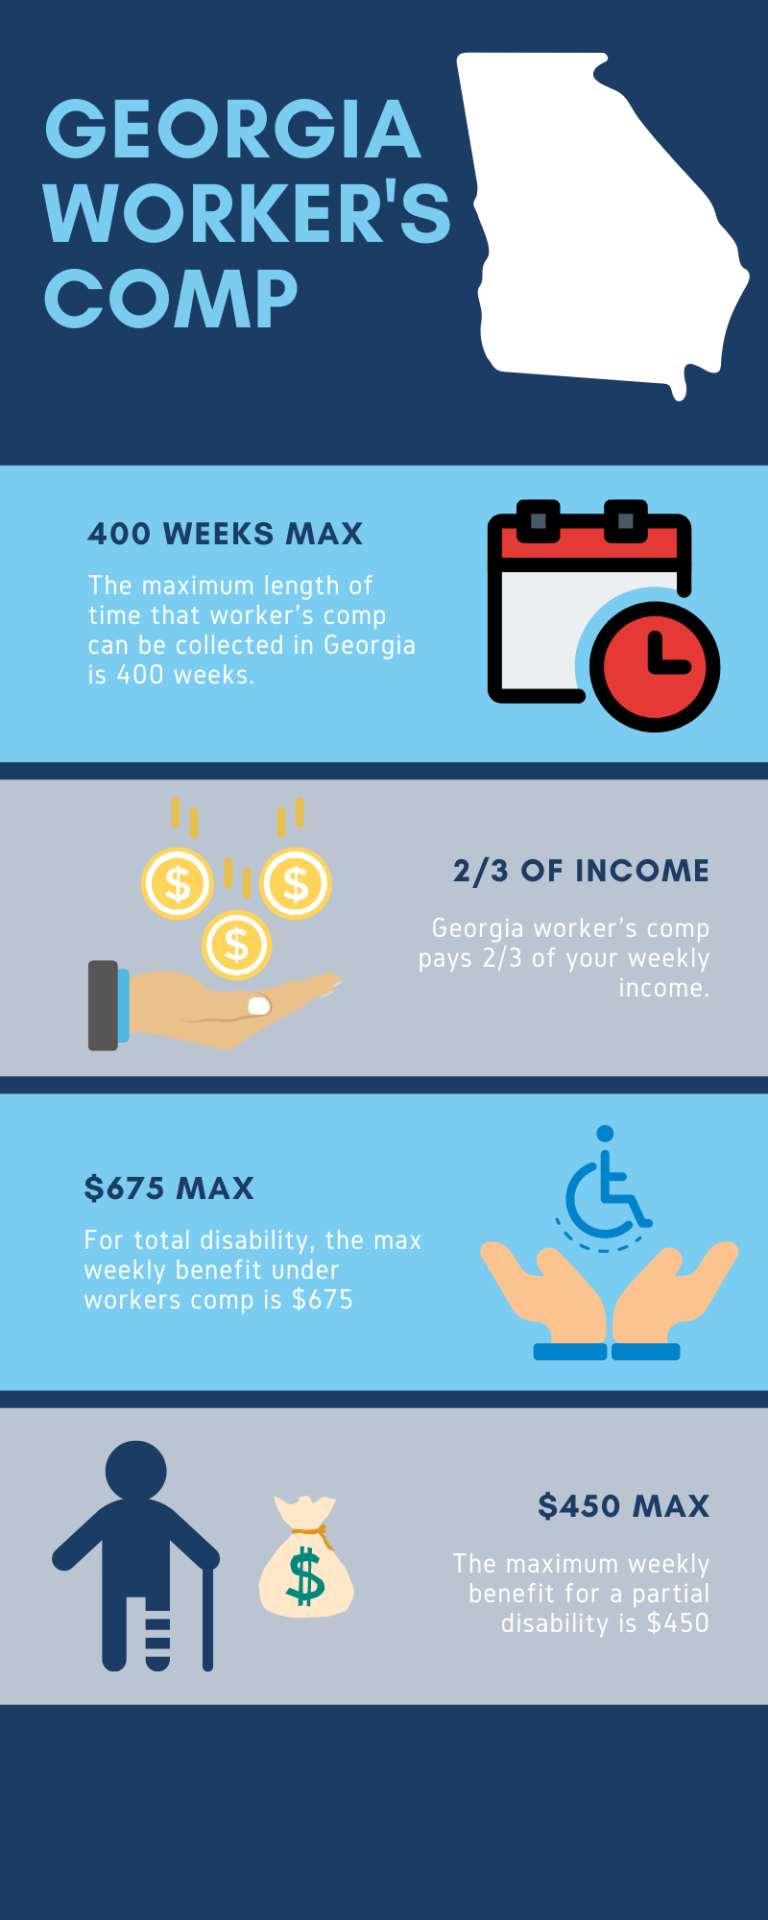 Workers Compensation Law — Lawsuit Information Center